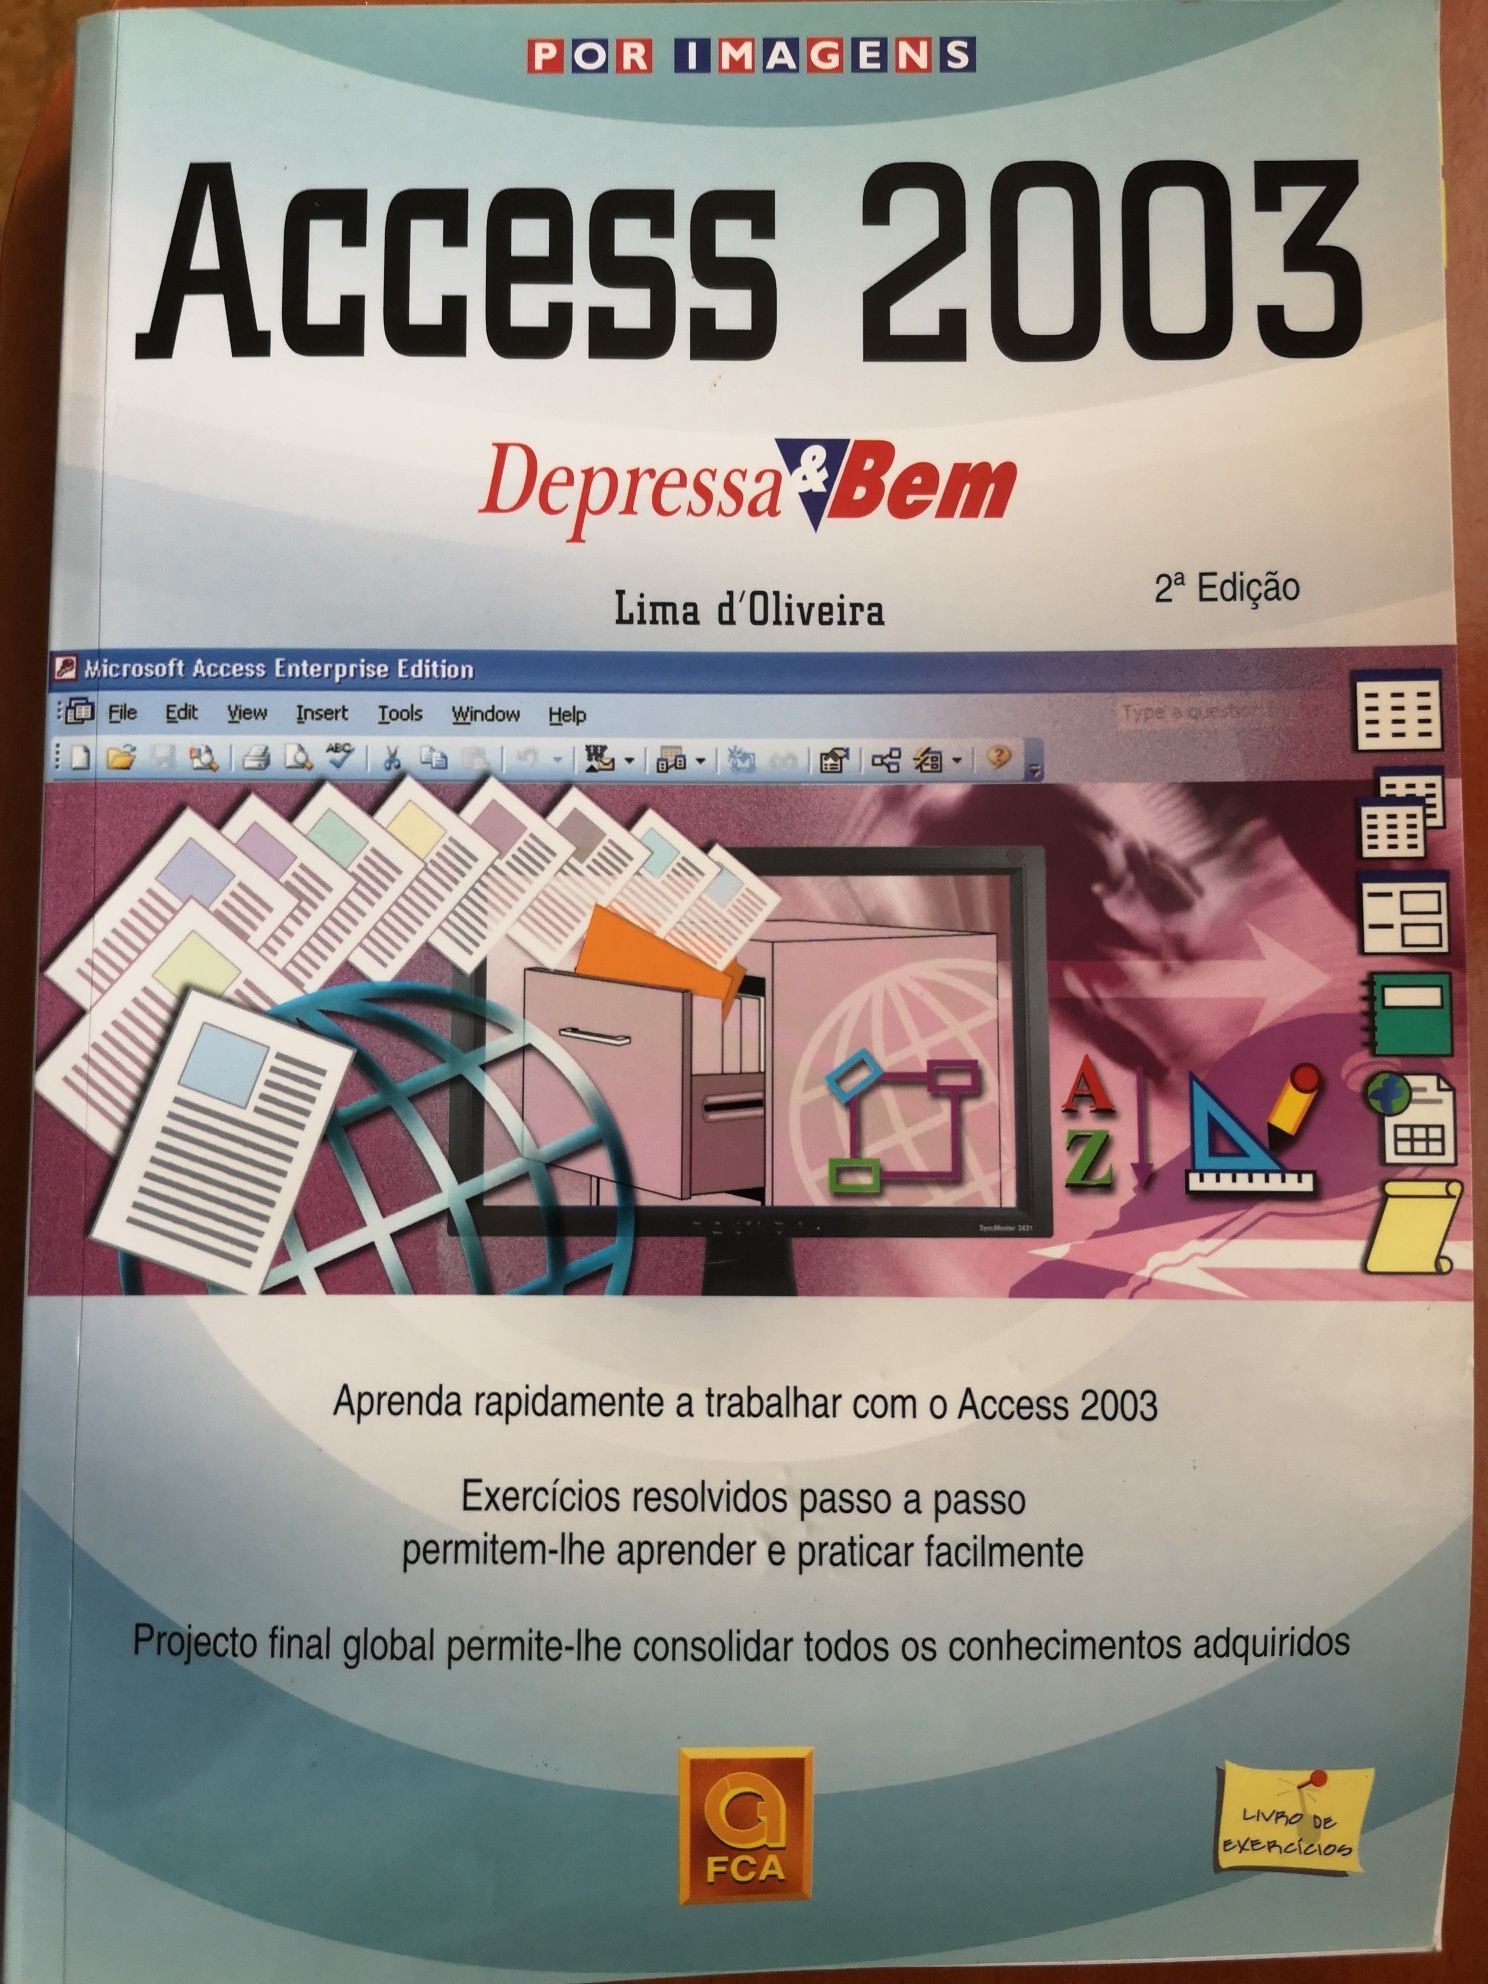 Livro "ACCESS 2003" - Portes incluídos